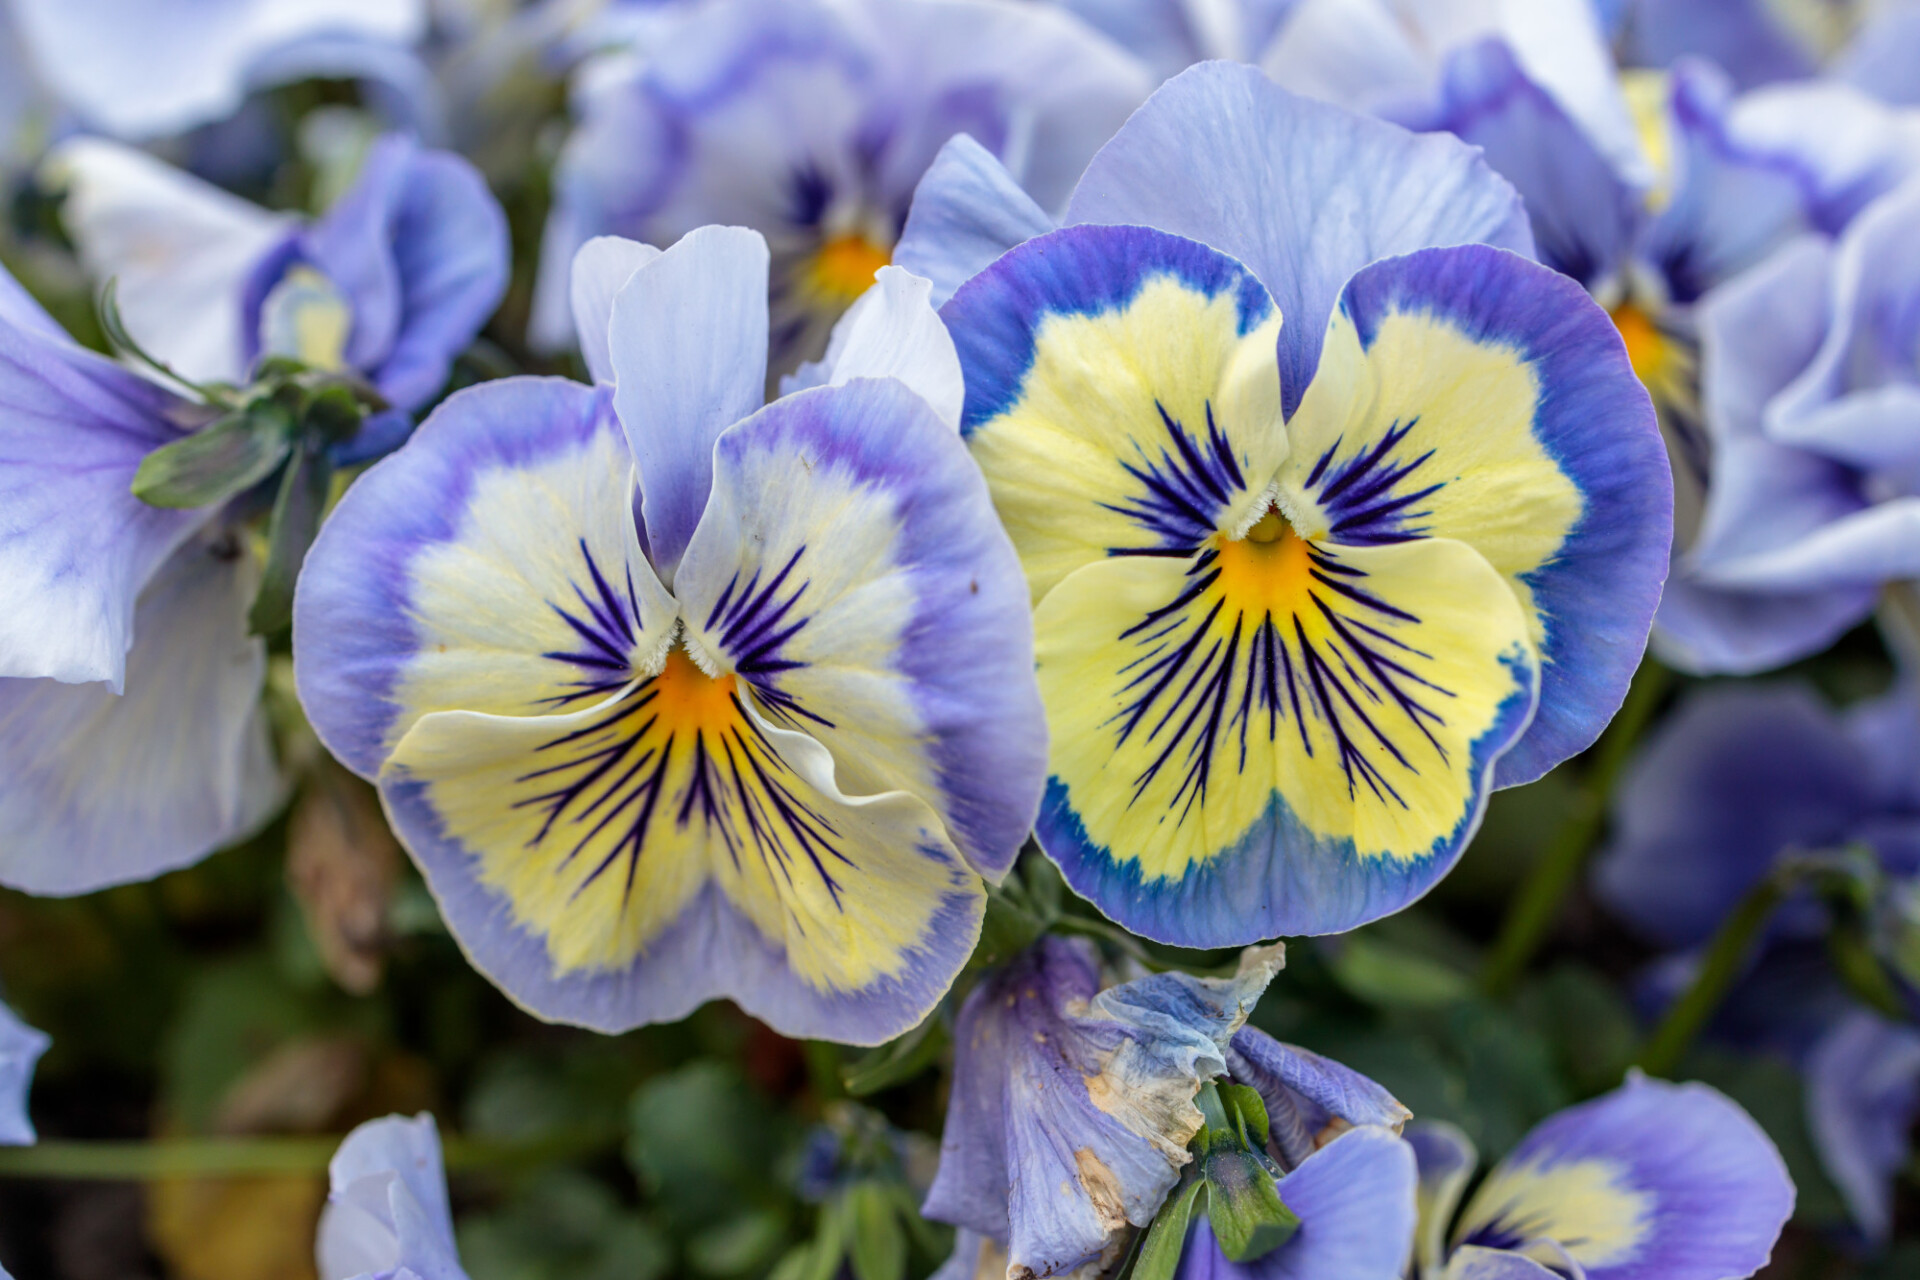 Yellow and purple viola flowers